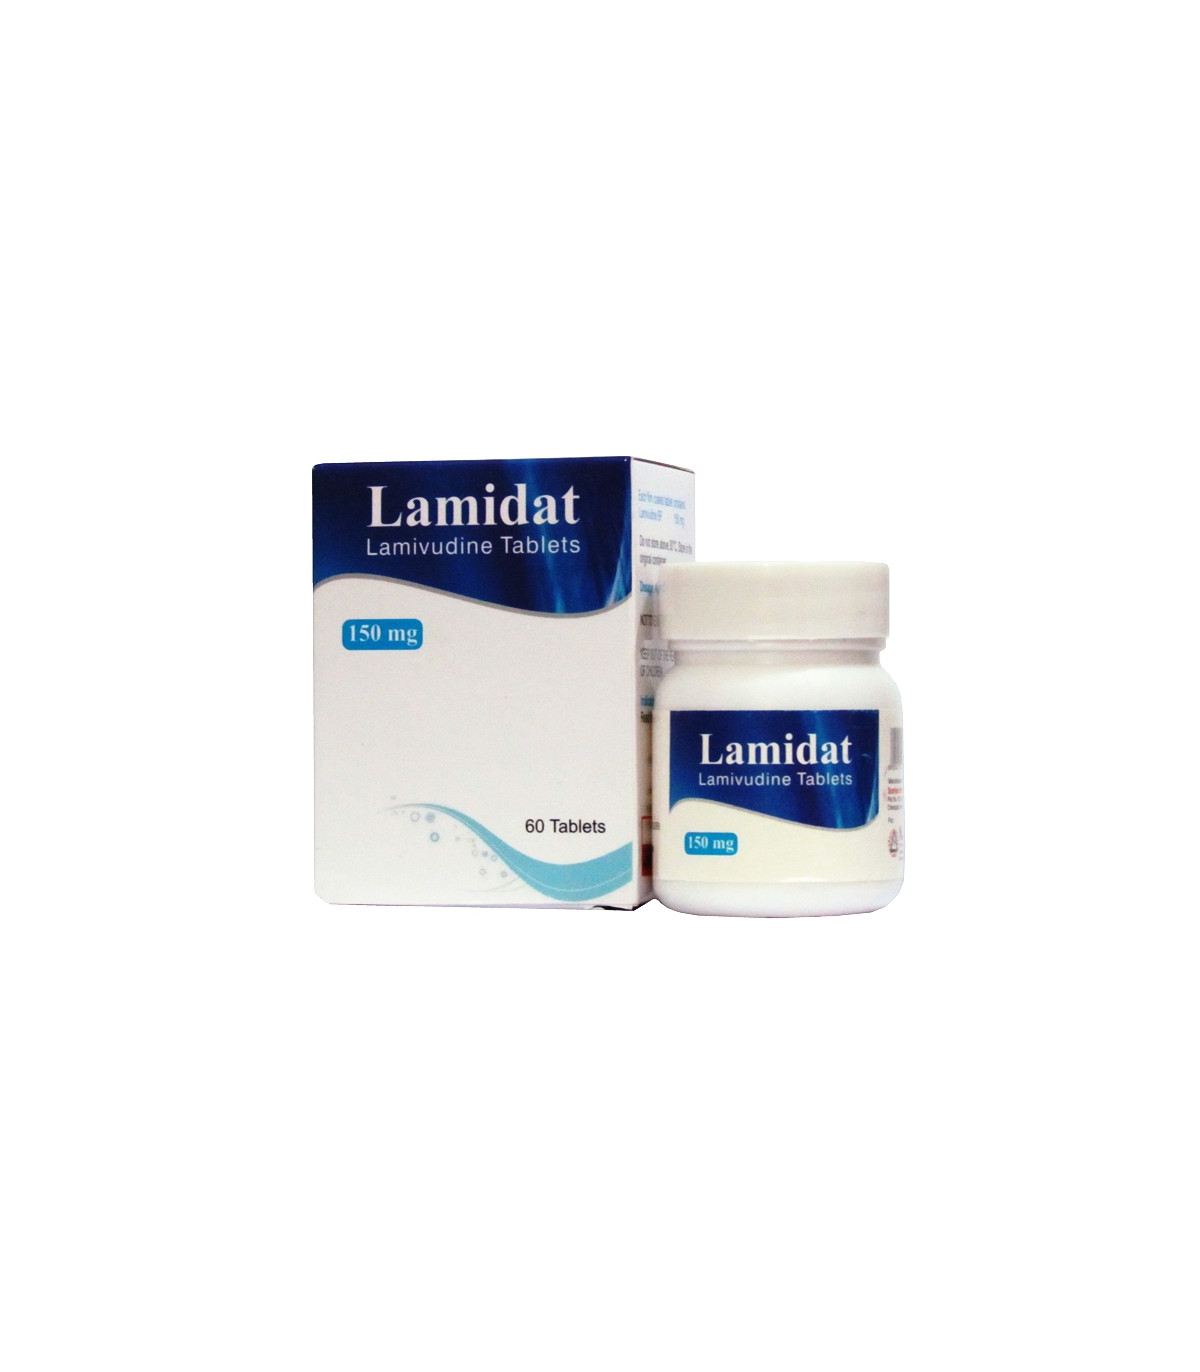 Lamidat Lamivudine 150mg – 60 Tablets